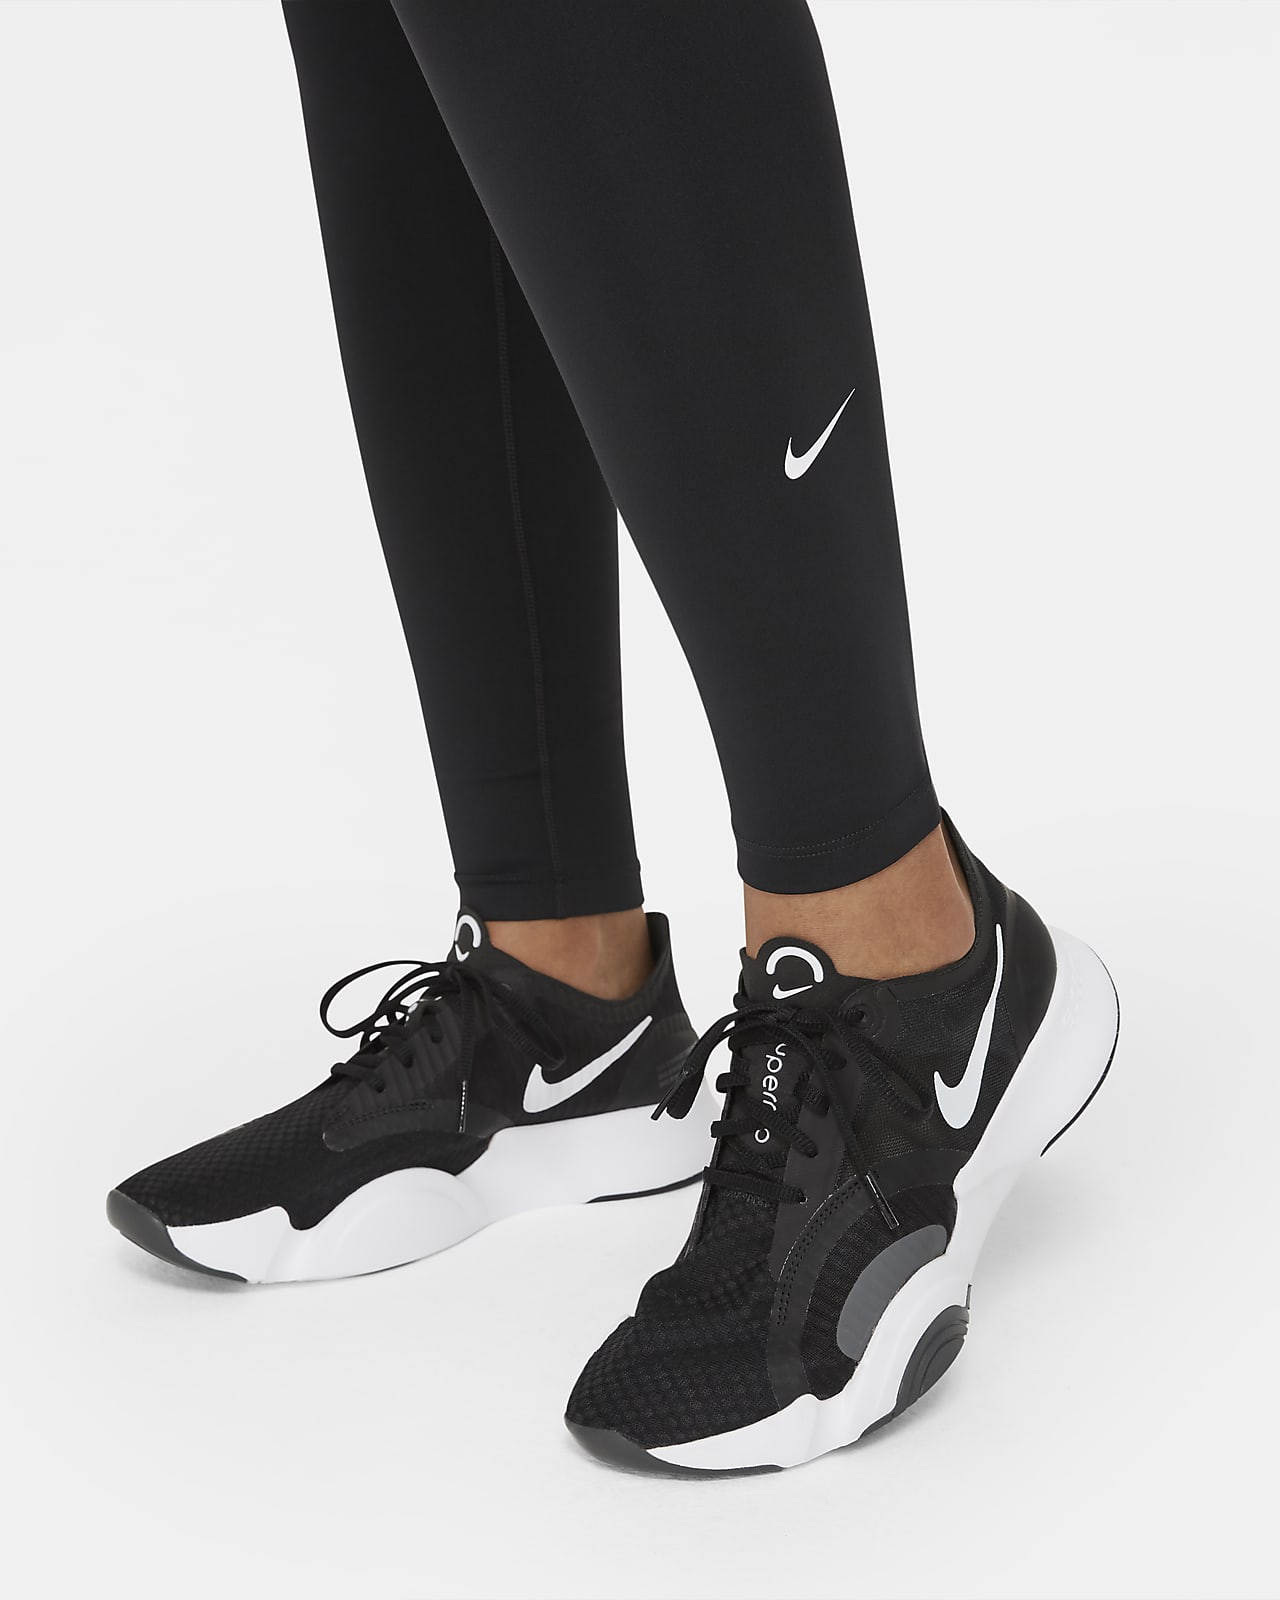 Zwart Nike Legging met hoge taille voor dames One - JD Sports Nederland